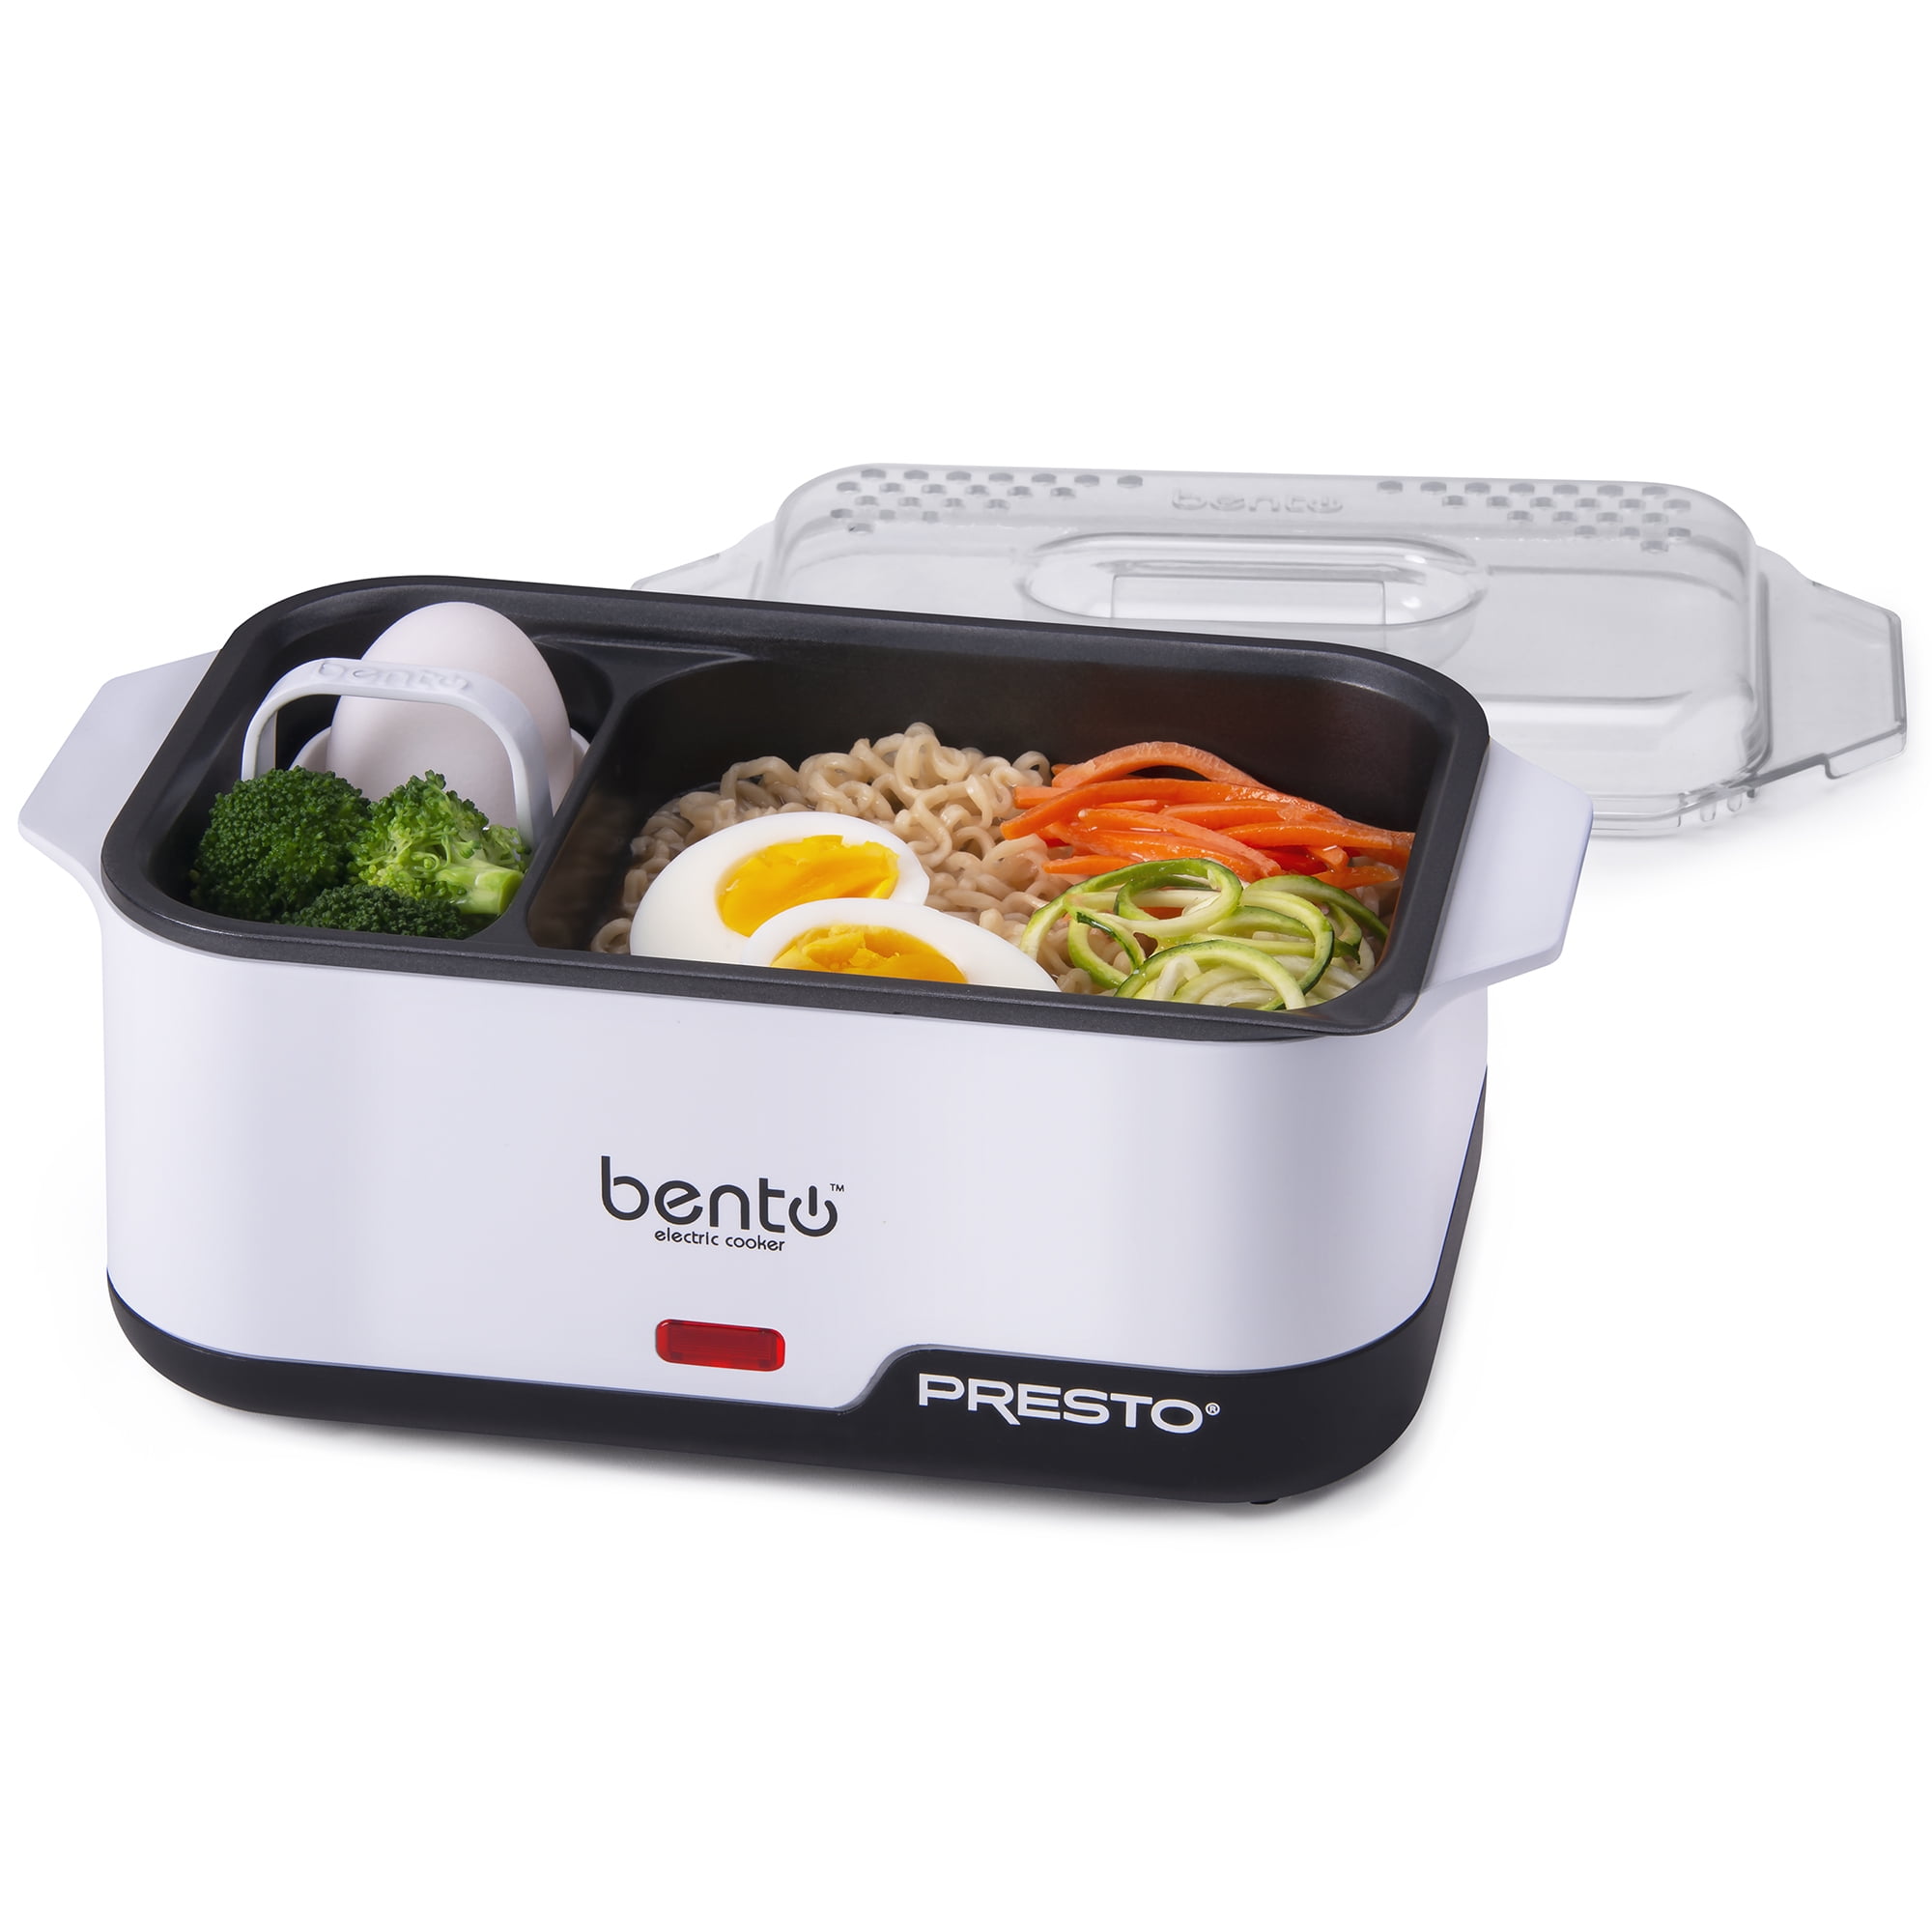 Picture of Presto 4634 Bento Electric Cooker Steamer